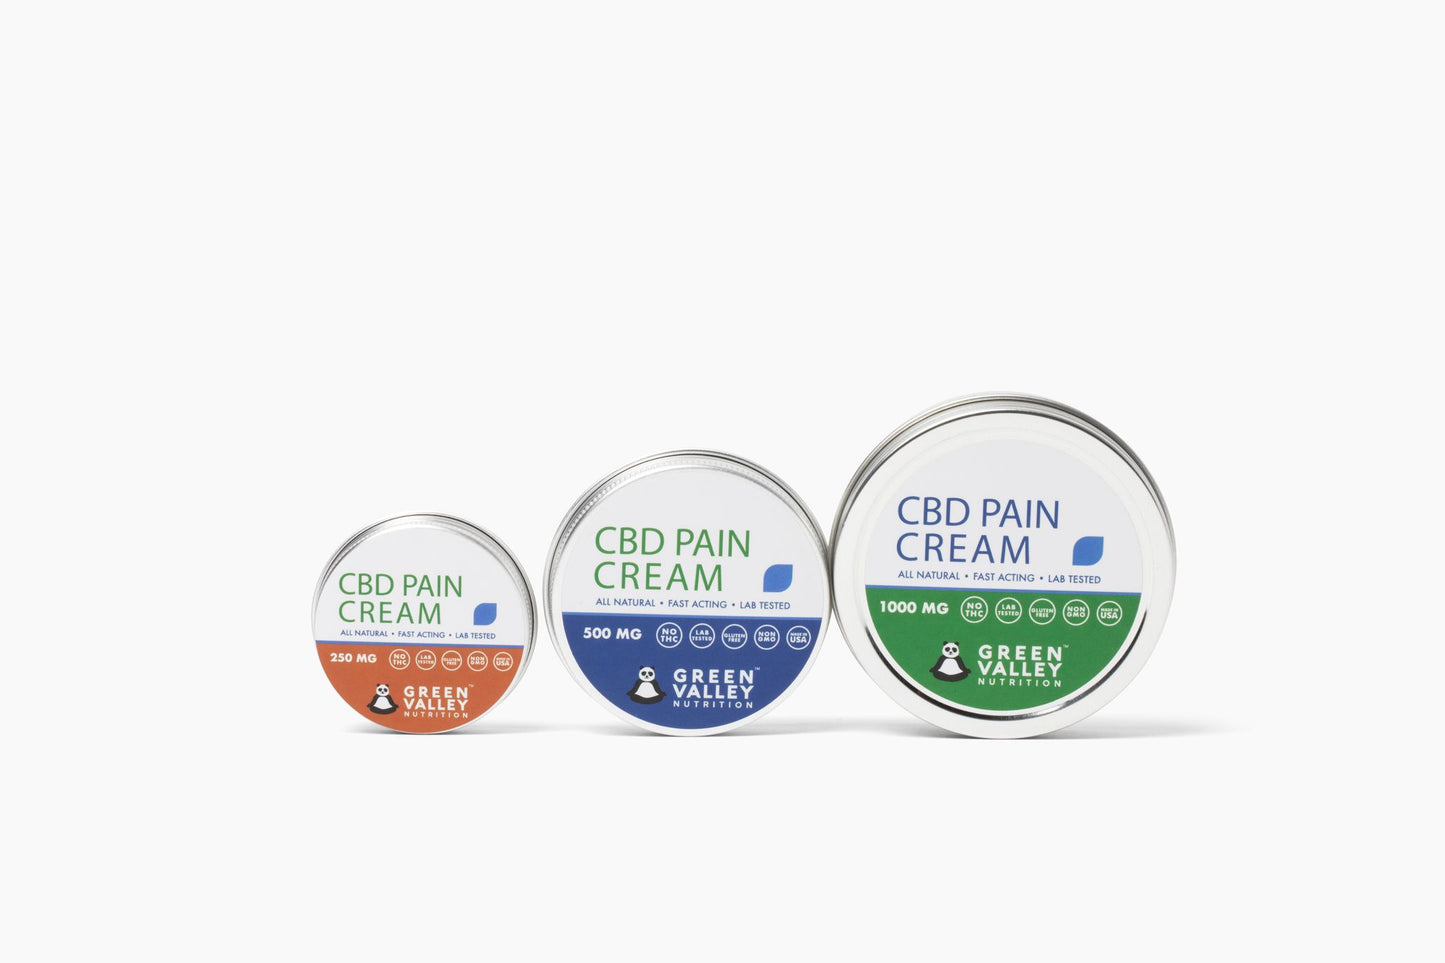 CBD Pain Cream - Medium 500mg